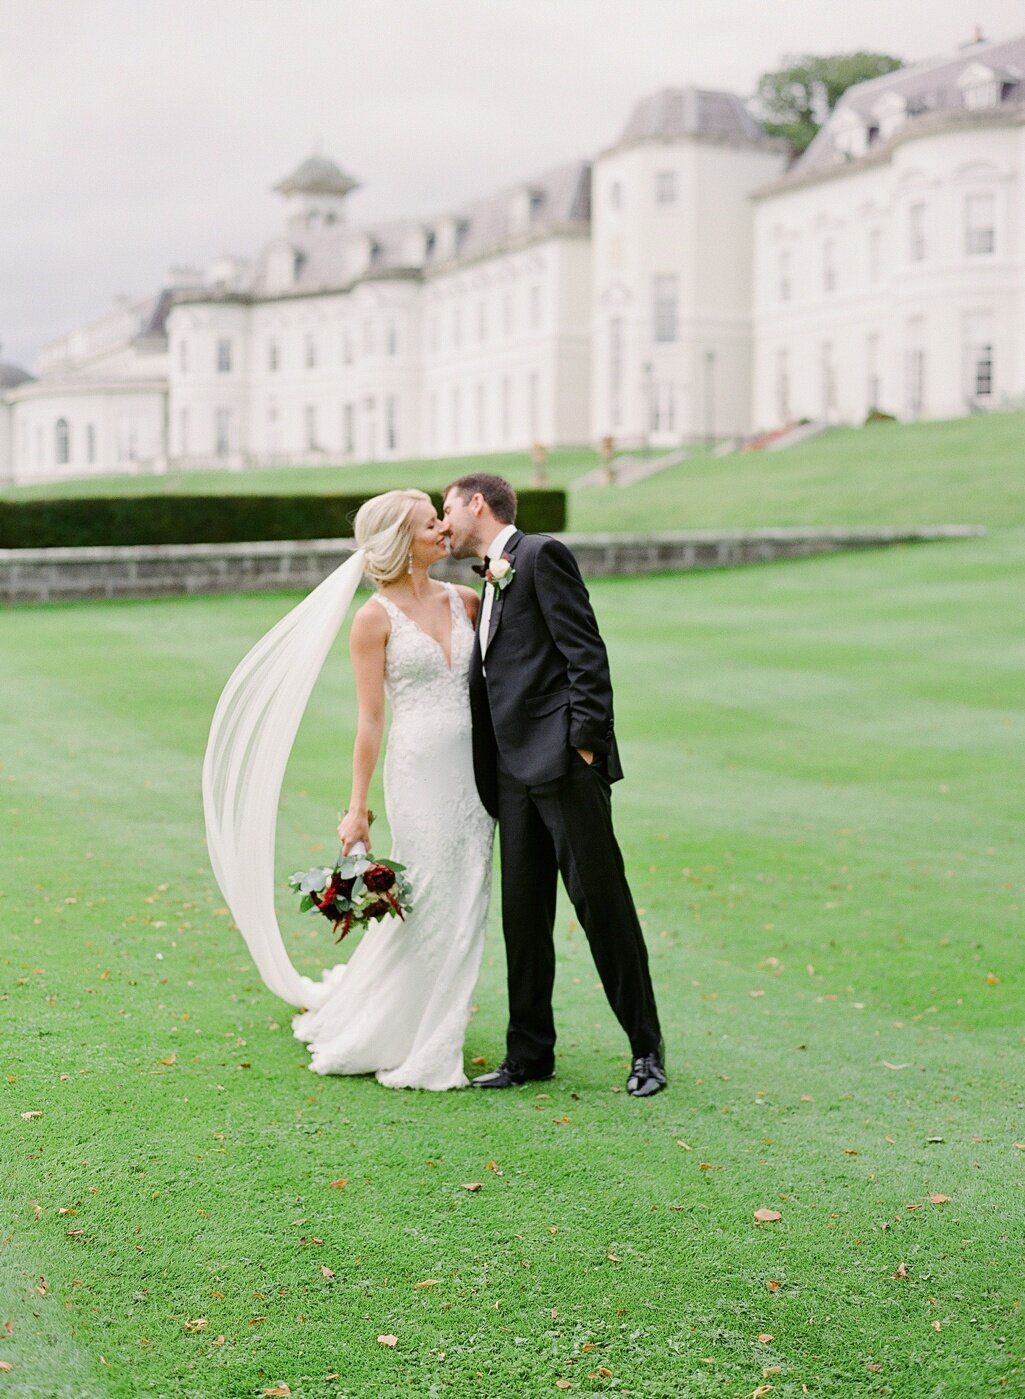 Jessie-Barksdale-Photography_K-Club-Ireland-Destination-Wedding-Photographer_0077